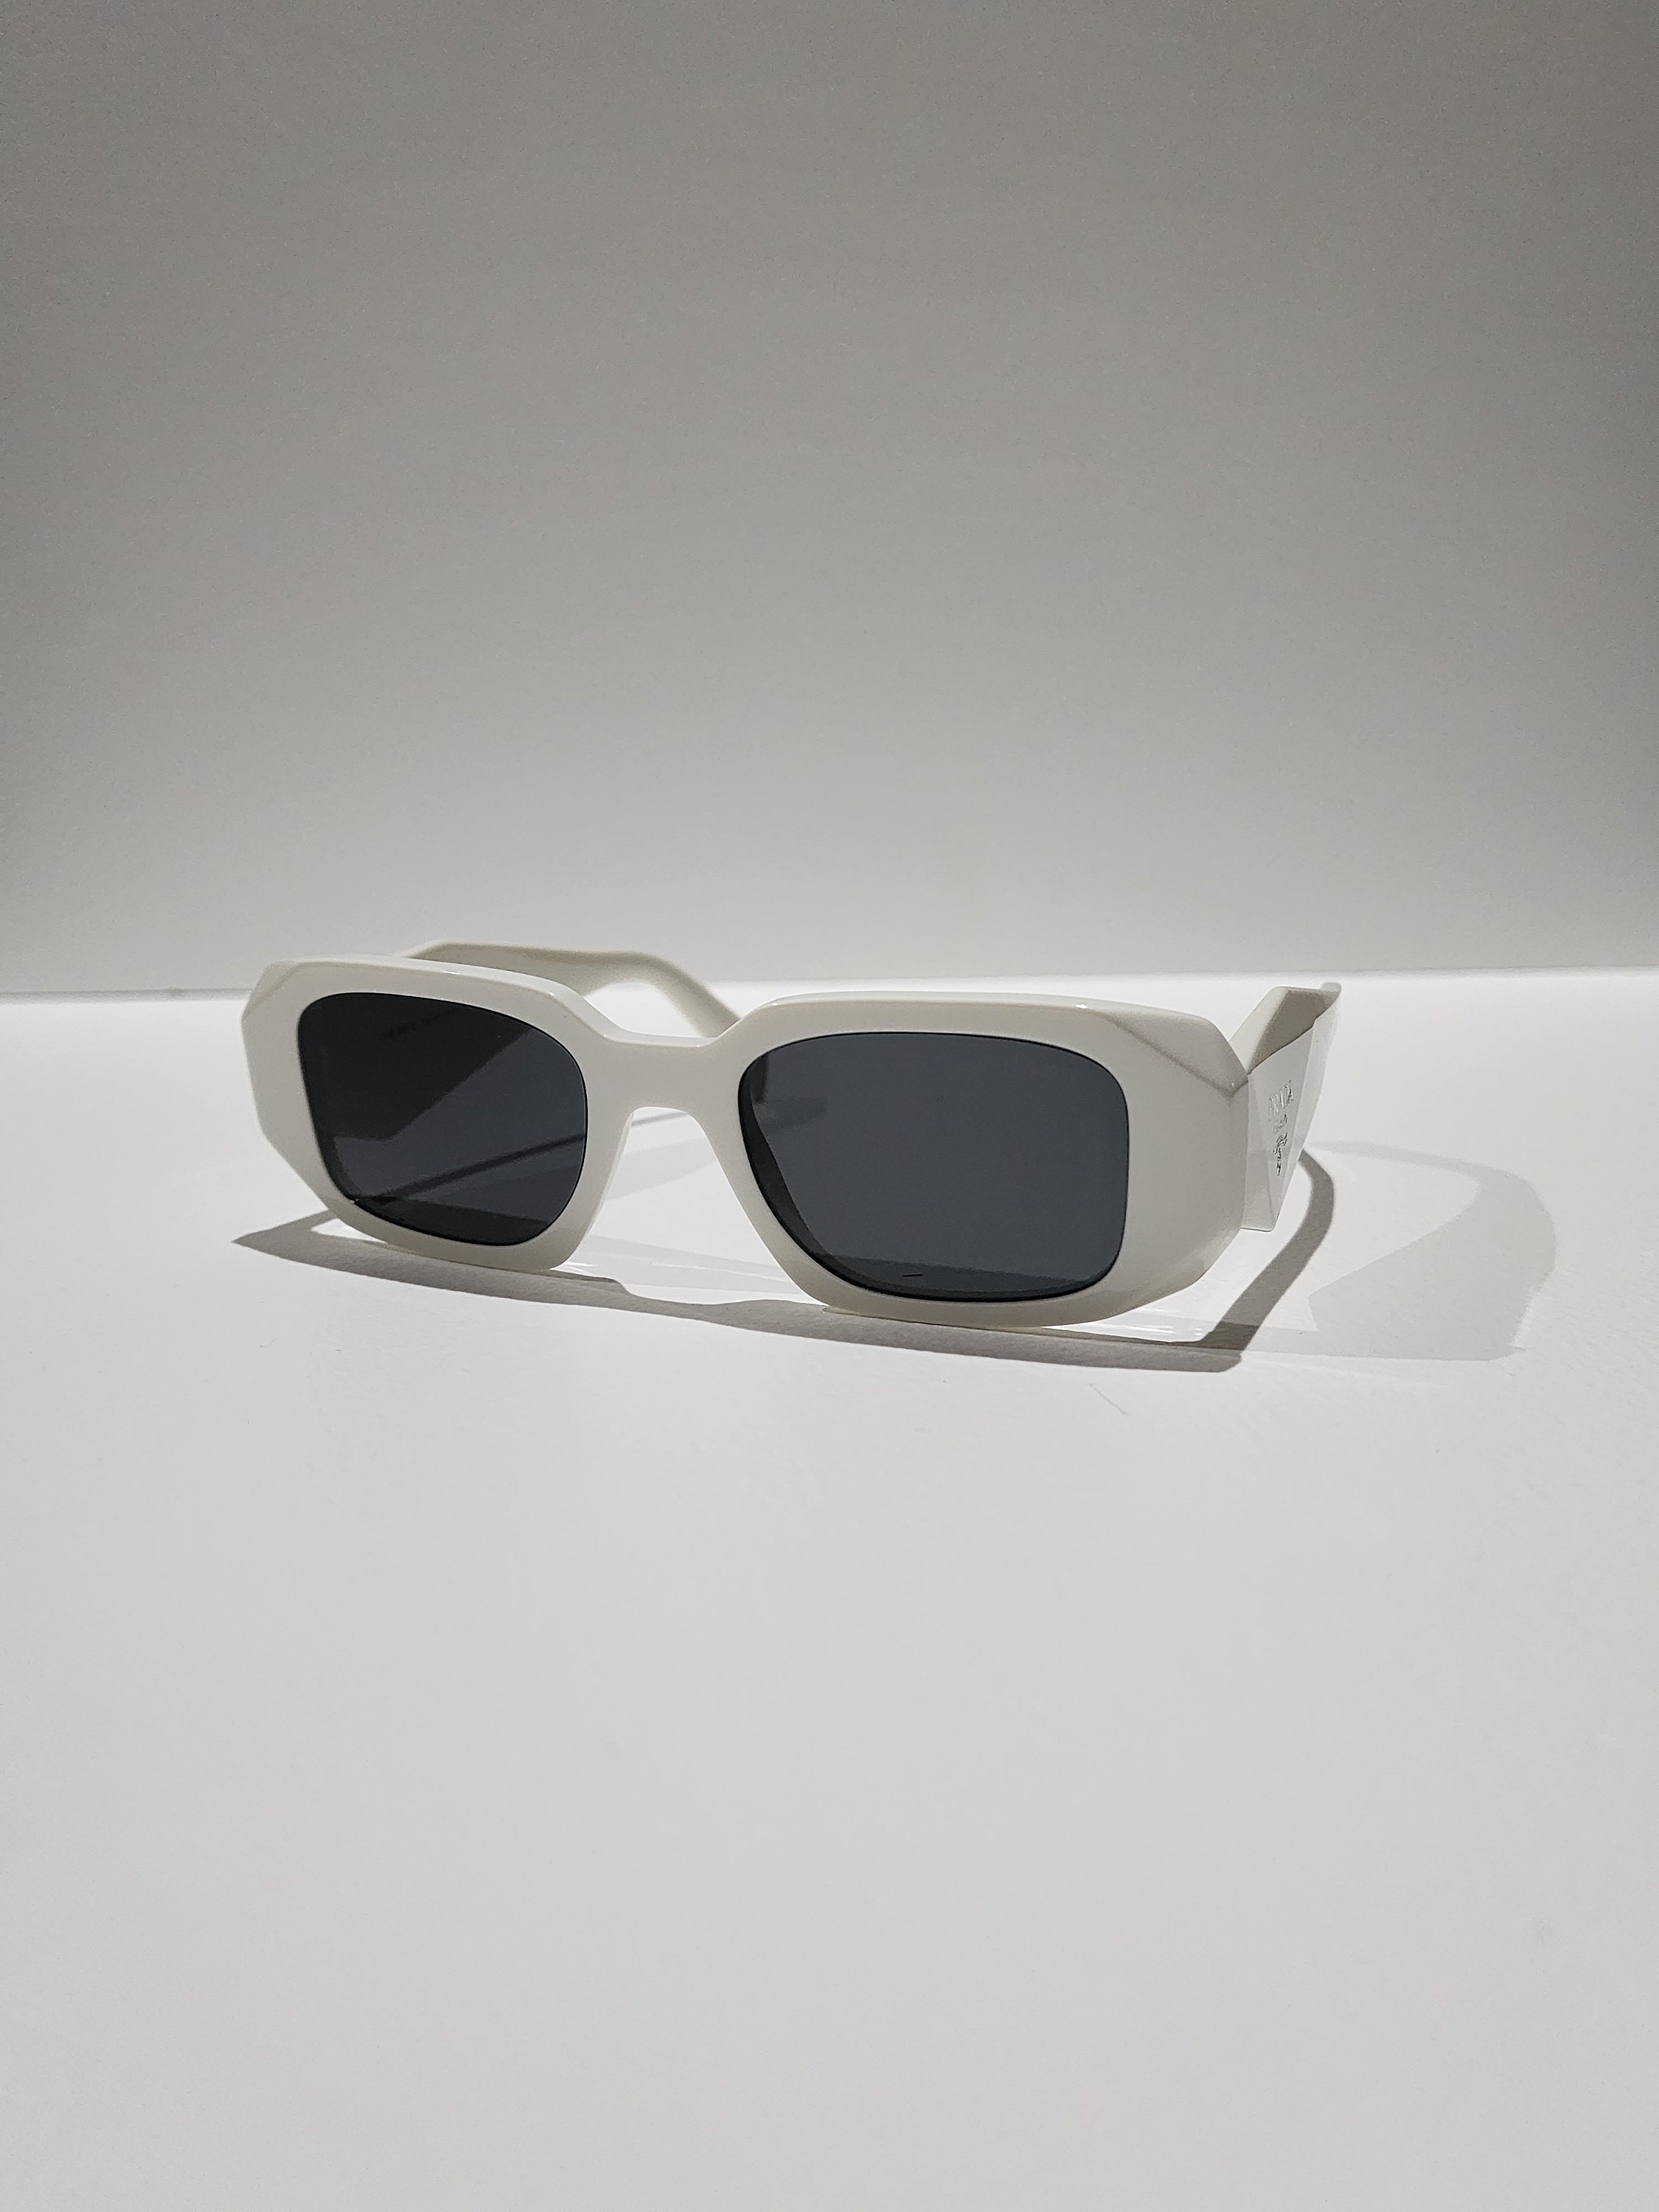 Chanel sunglasses model 5006 lunette brille y2k shades rimless